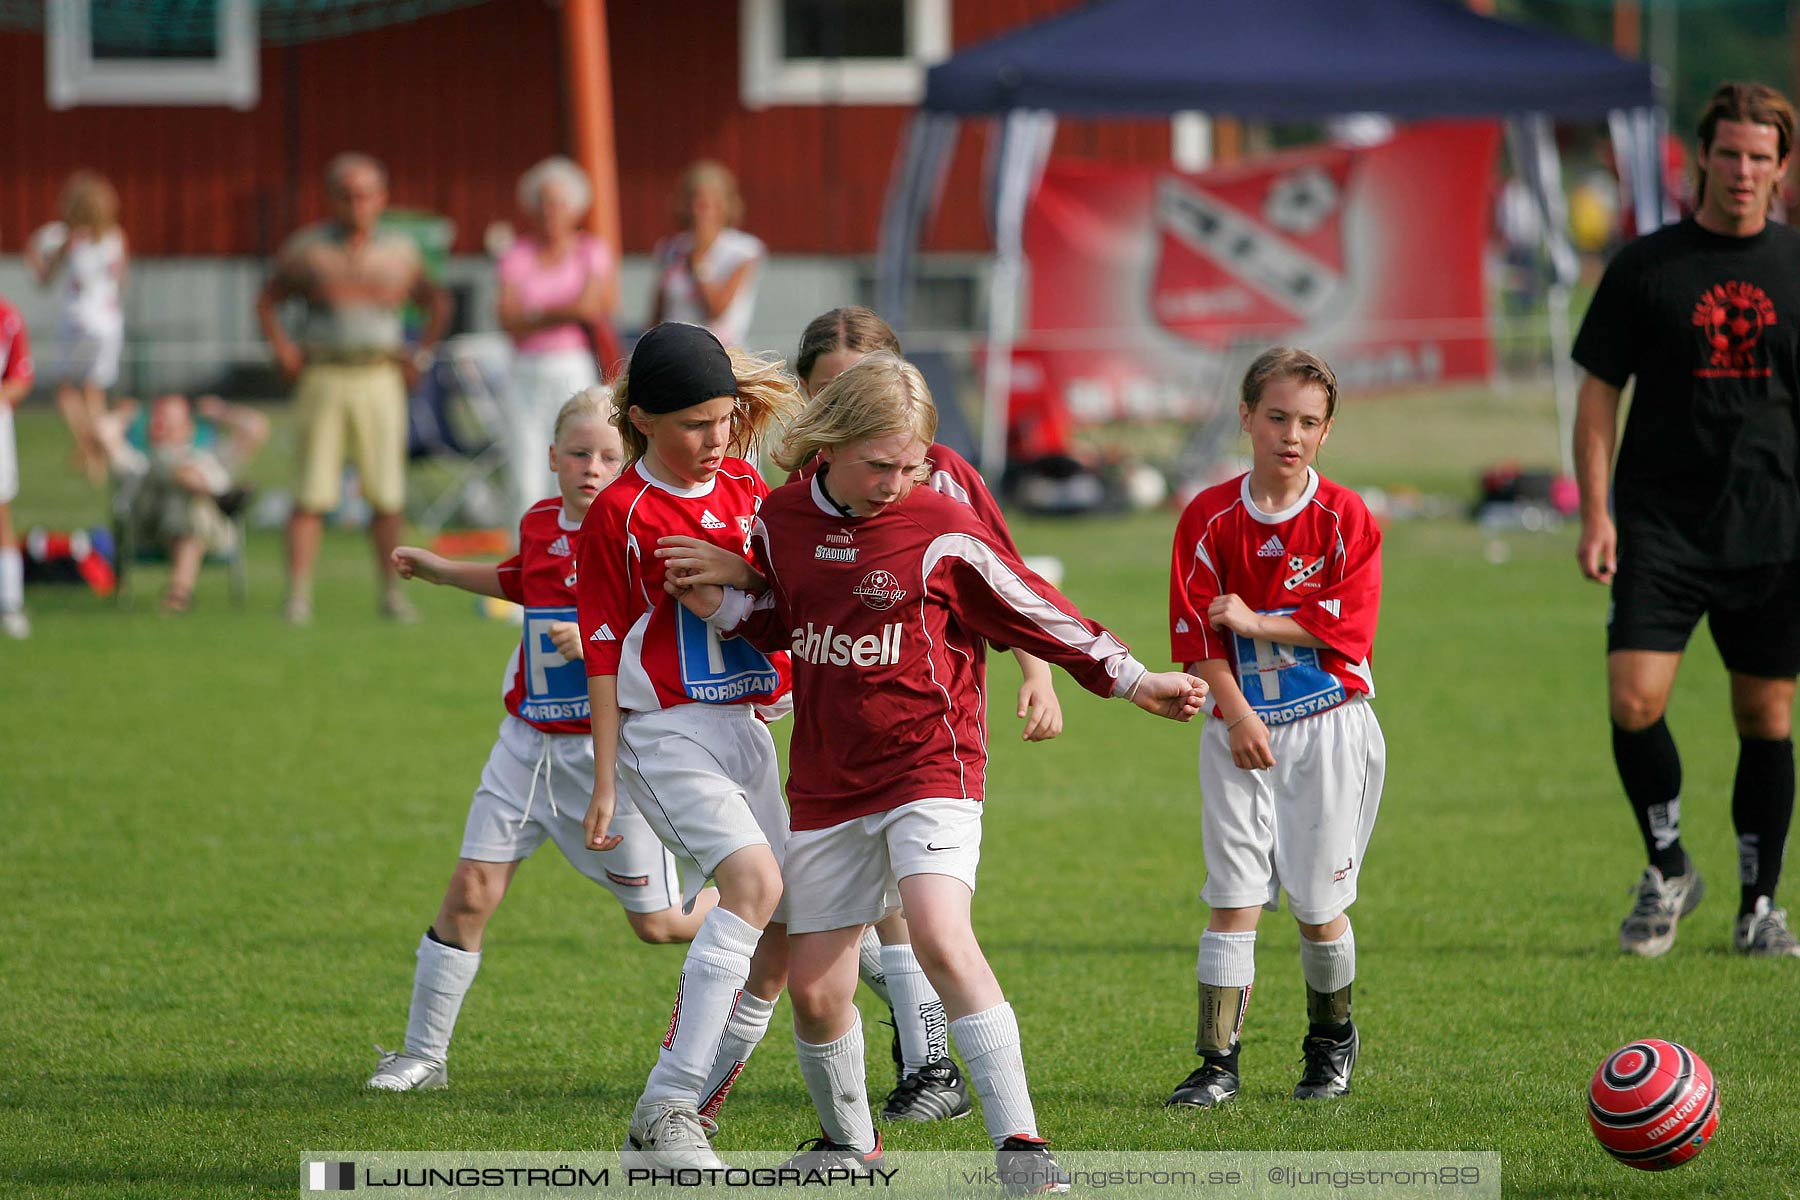 Ulvacupen 2006,mix,Åbrovallen,Ulvåker,Sverige,Fotboll,,2006,147423